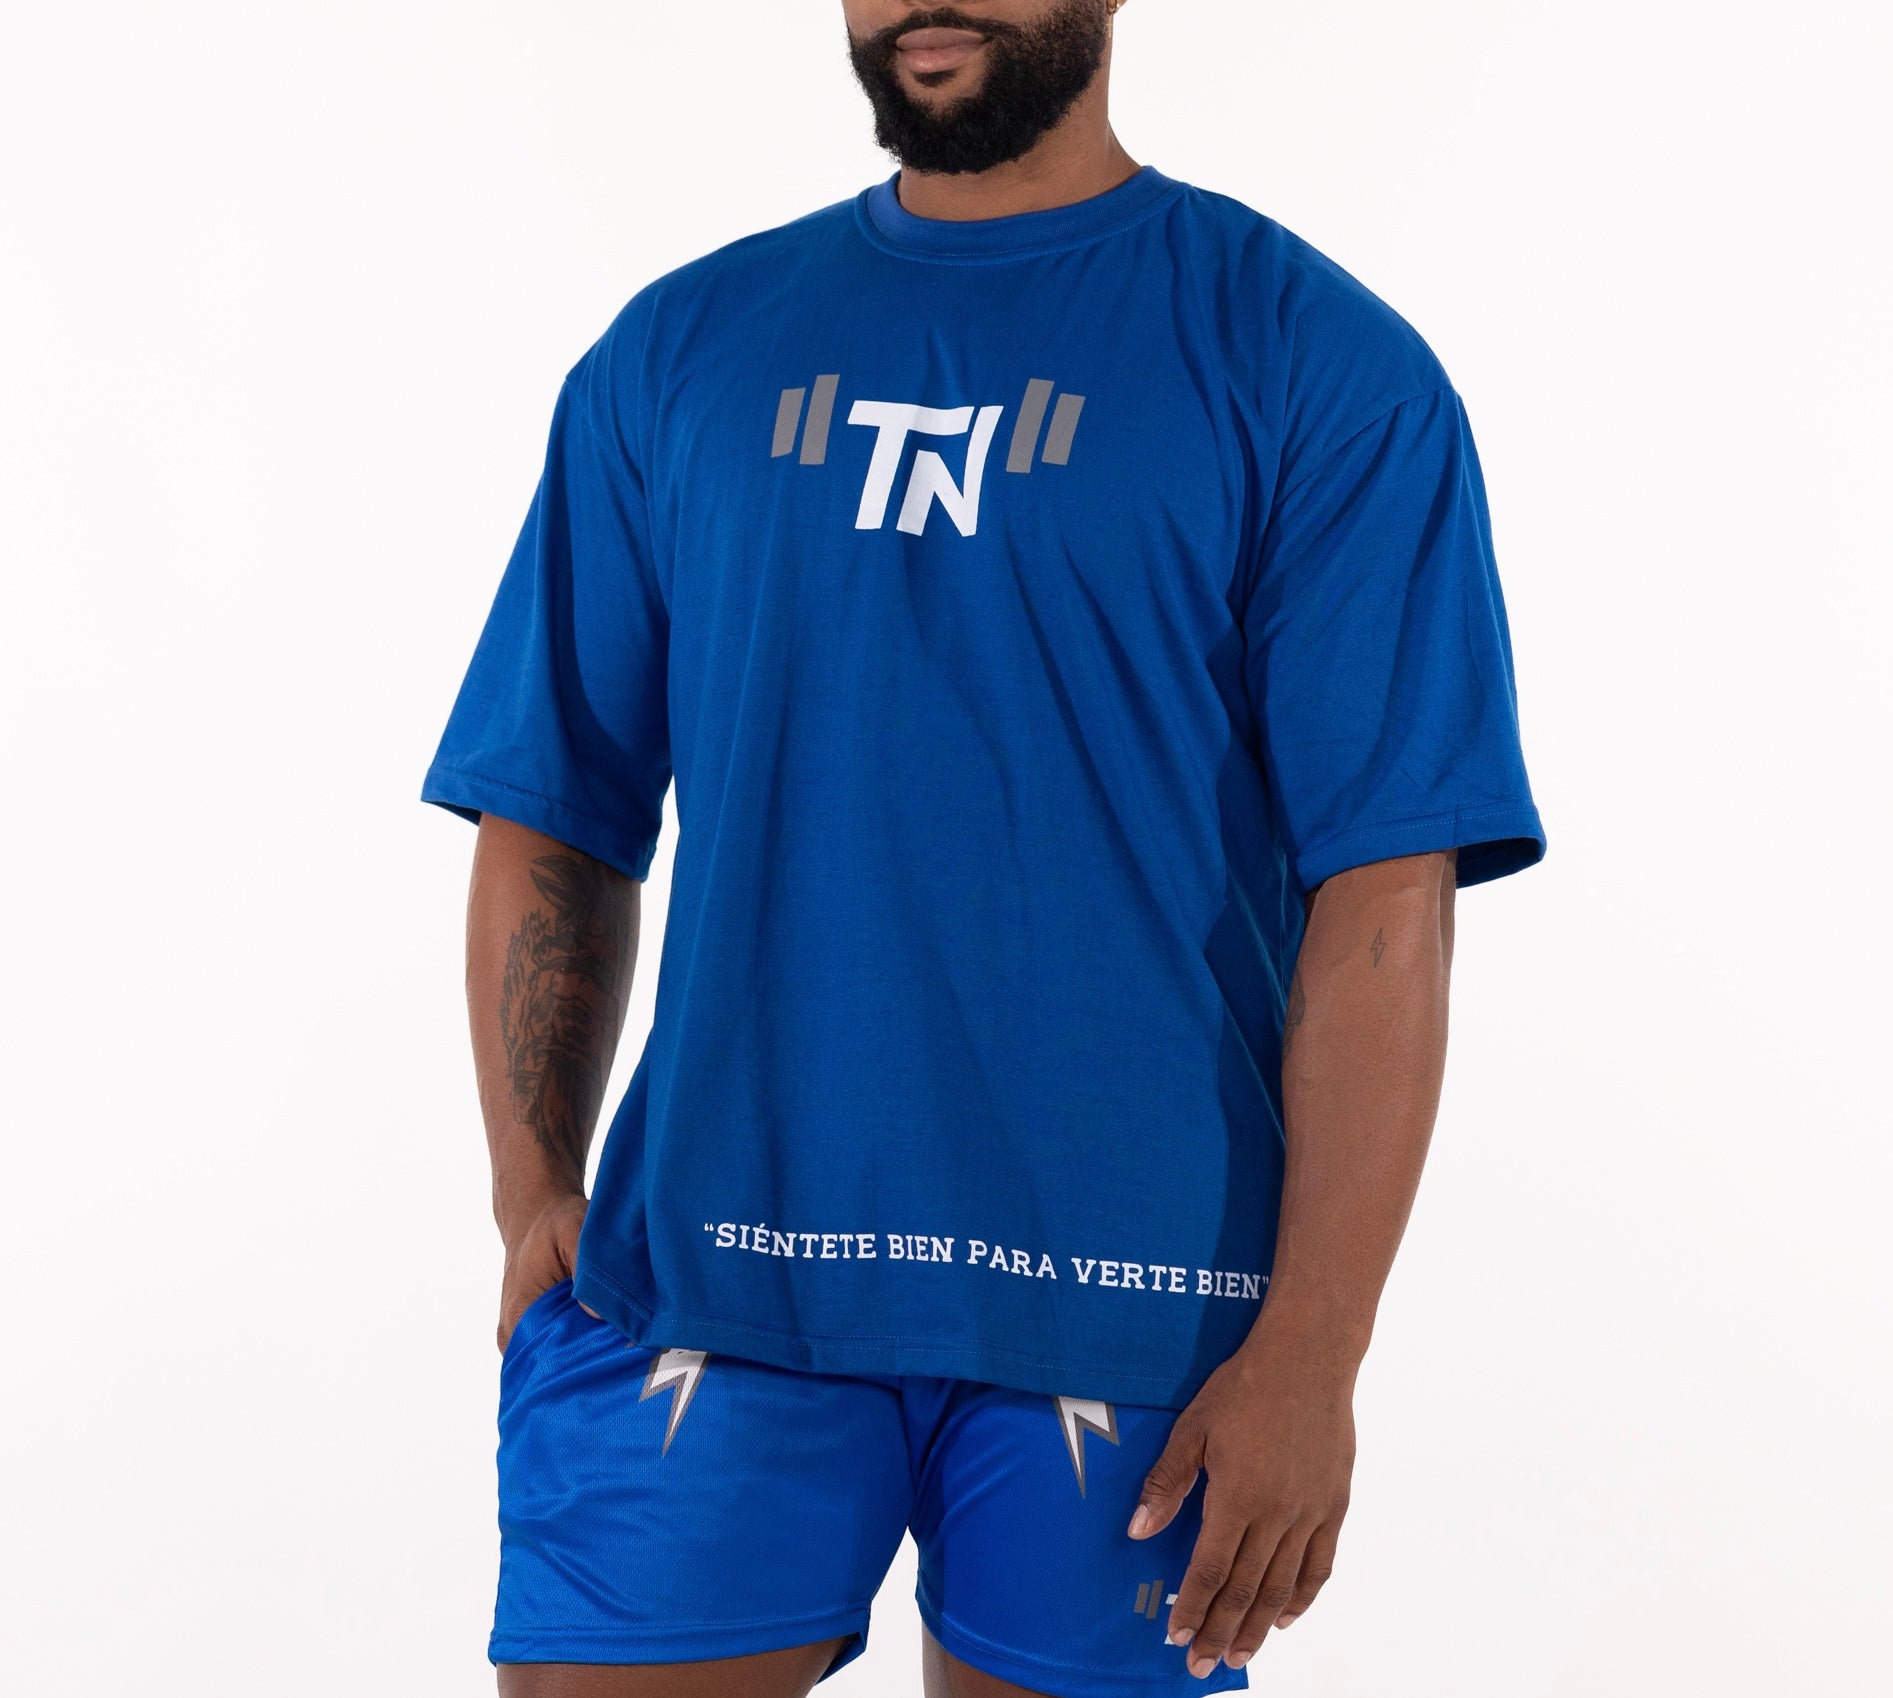 TN “Cree en ti” Oversized T shirt